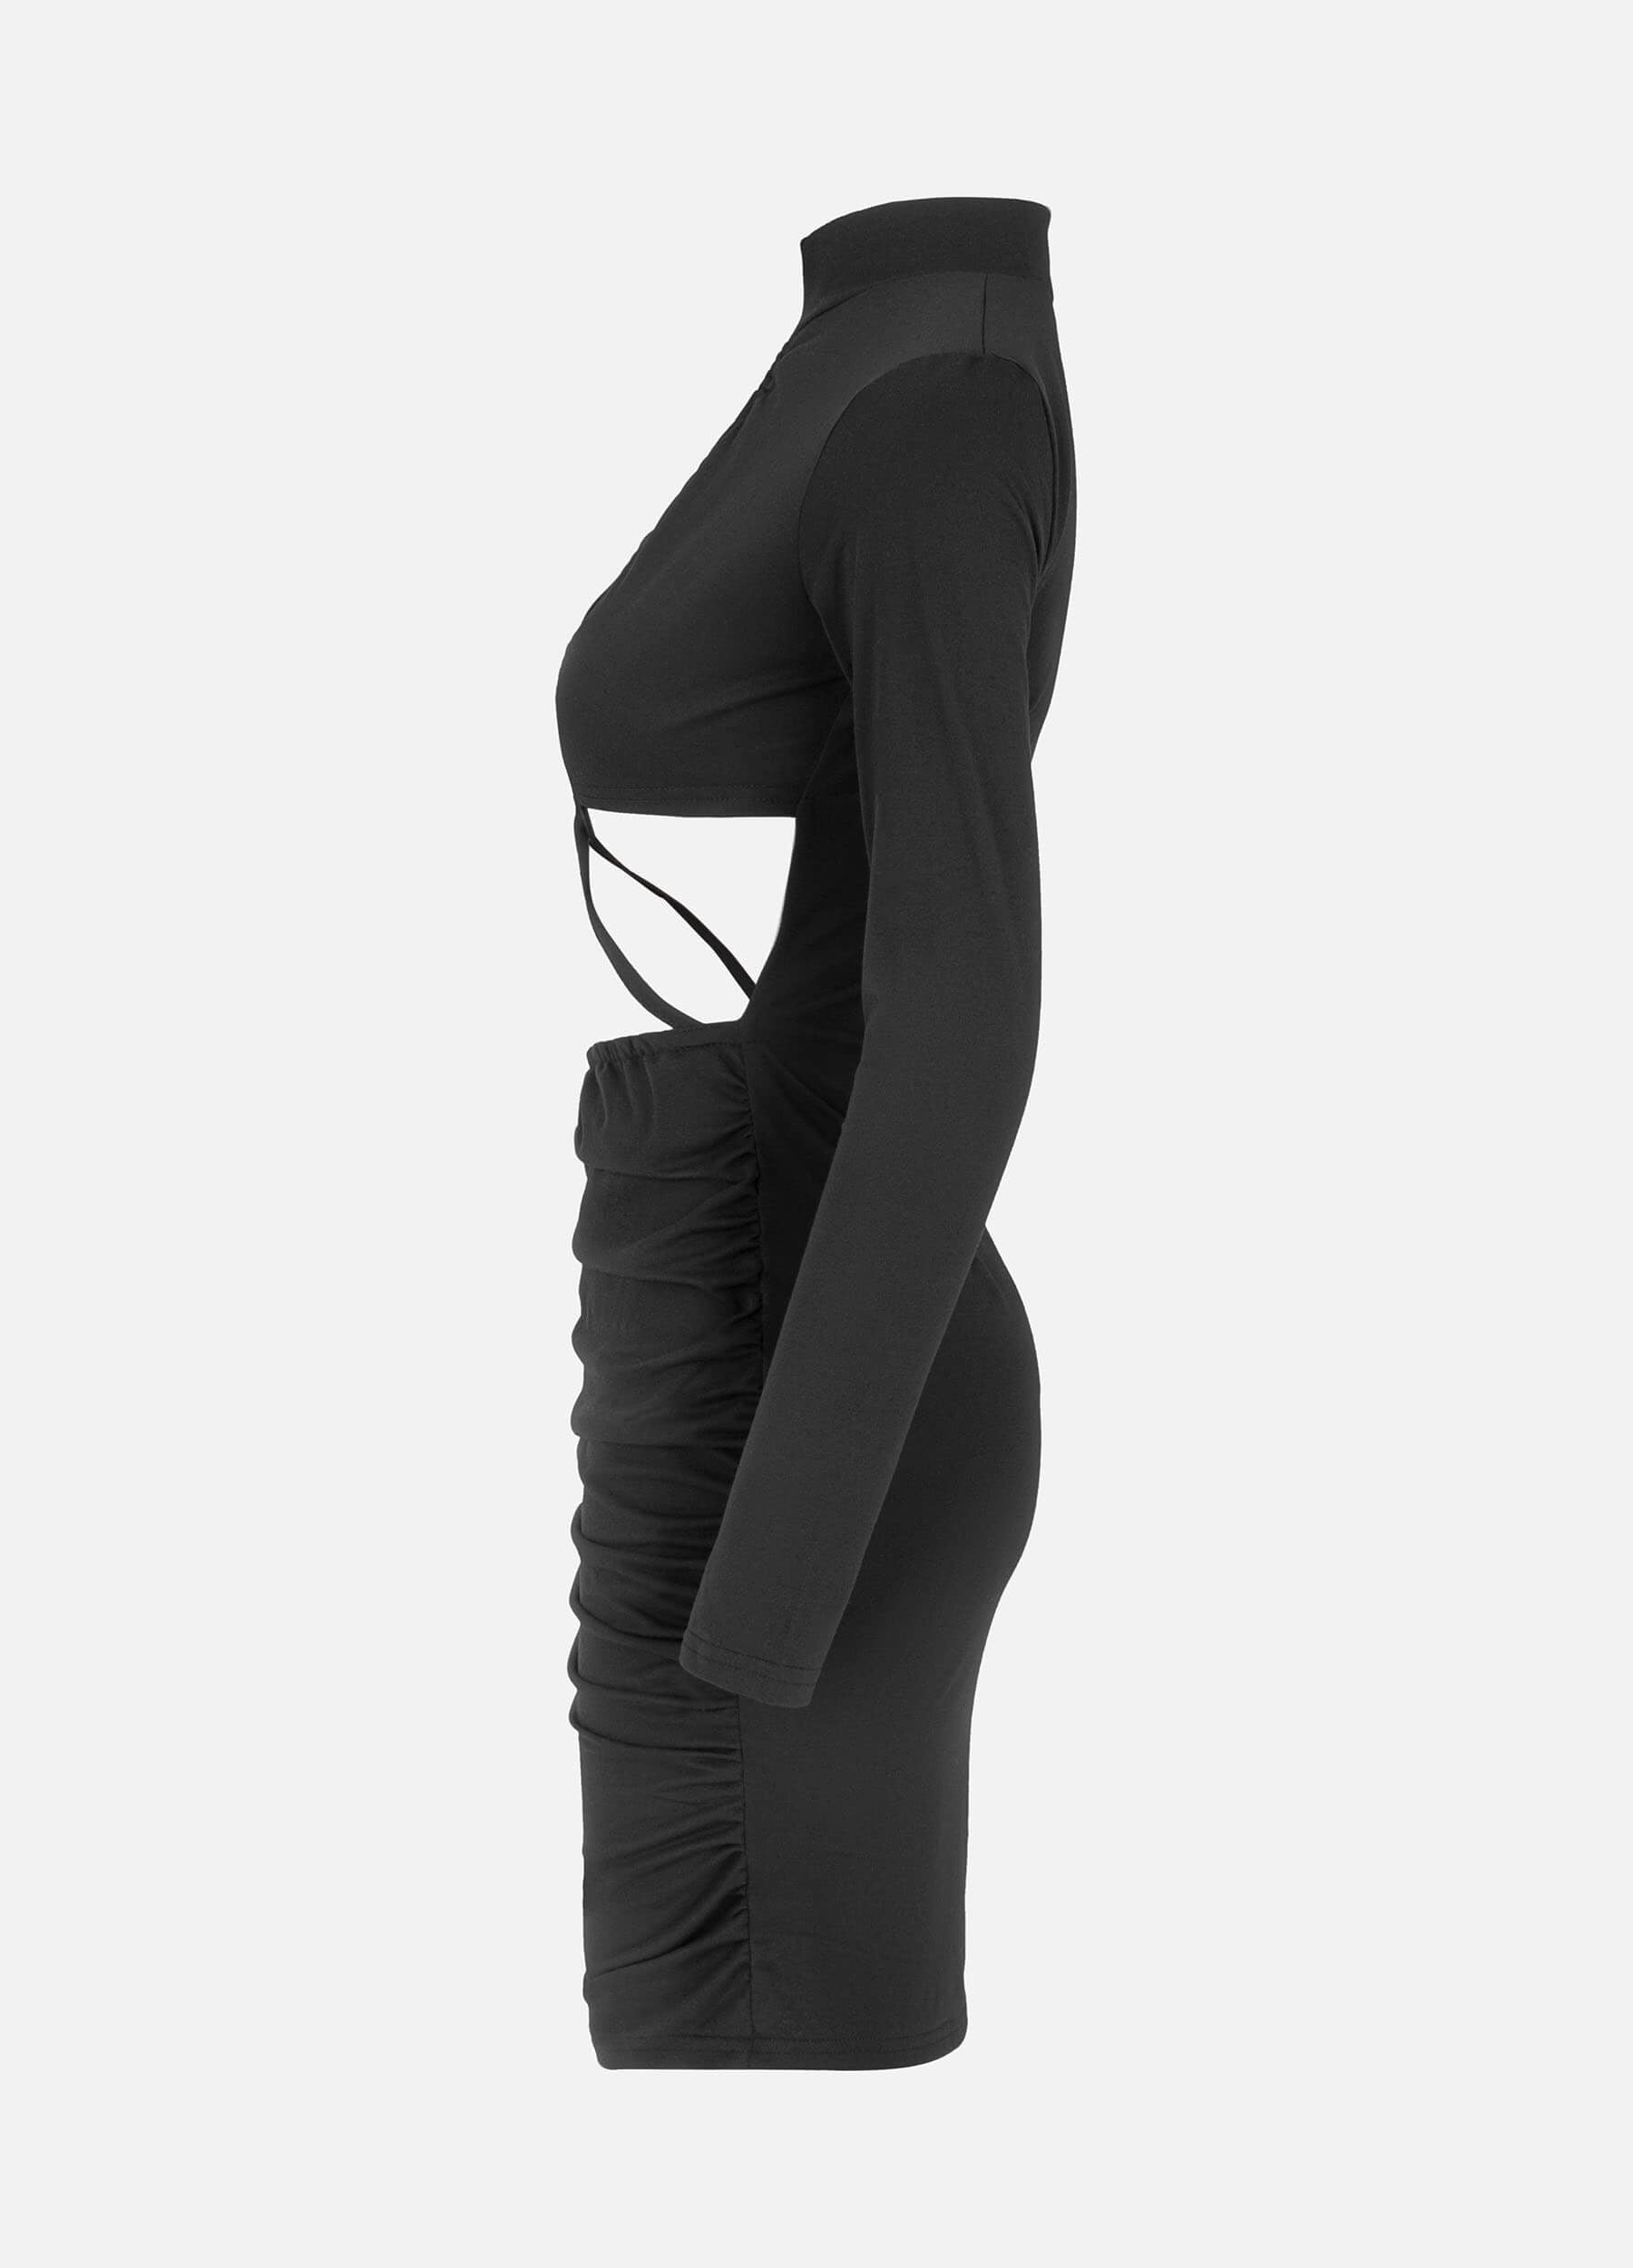 MECALA Women's Stand Collar Tie Dye Criss Cross-Black side view